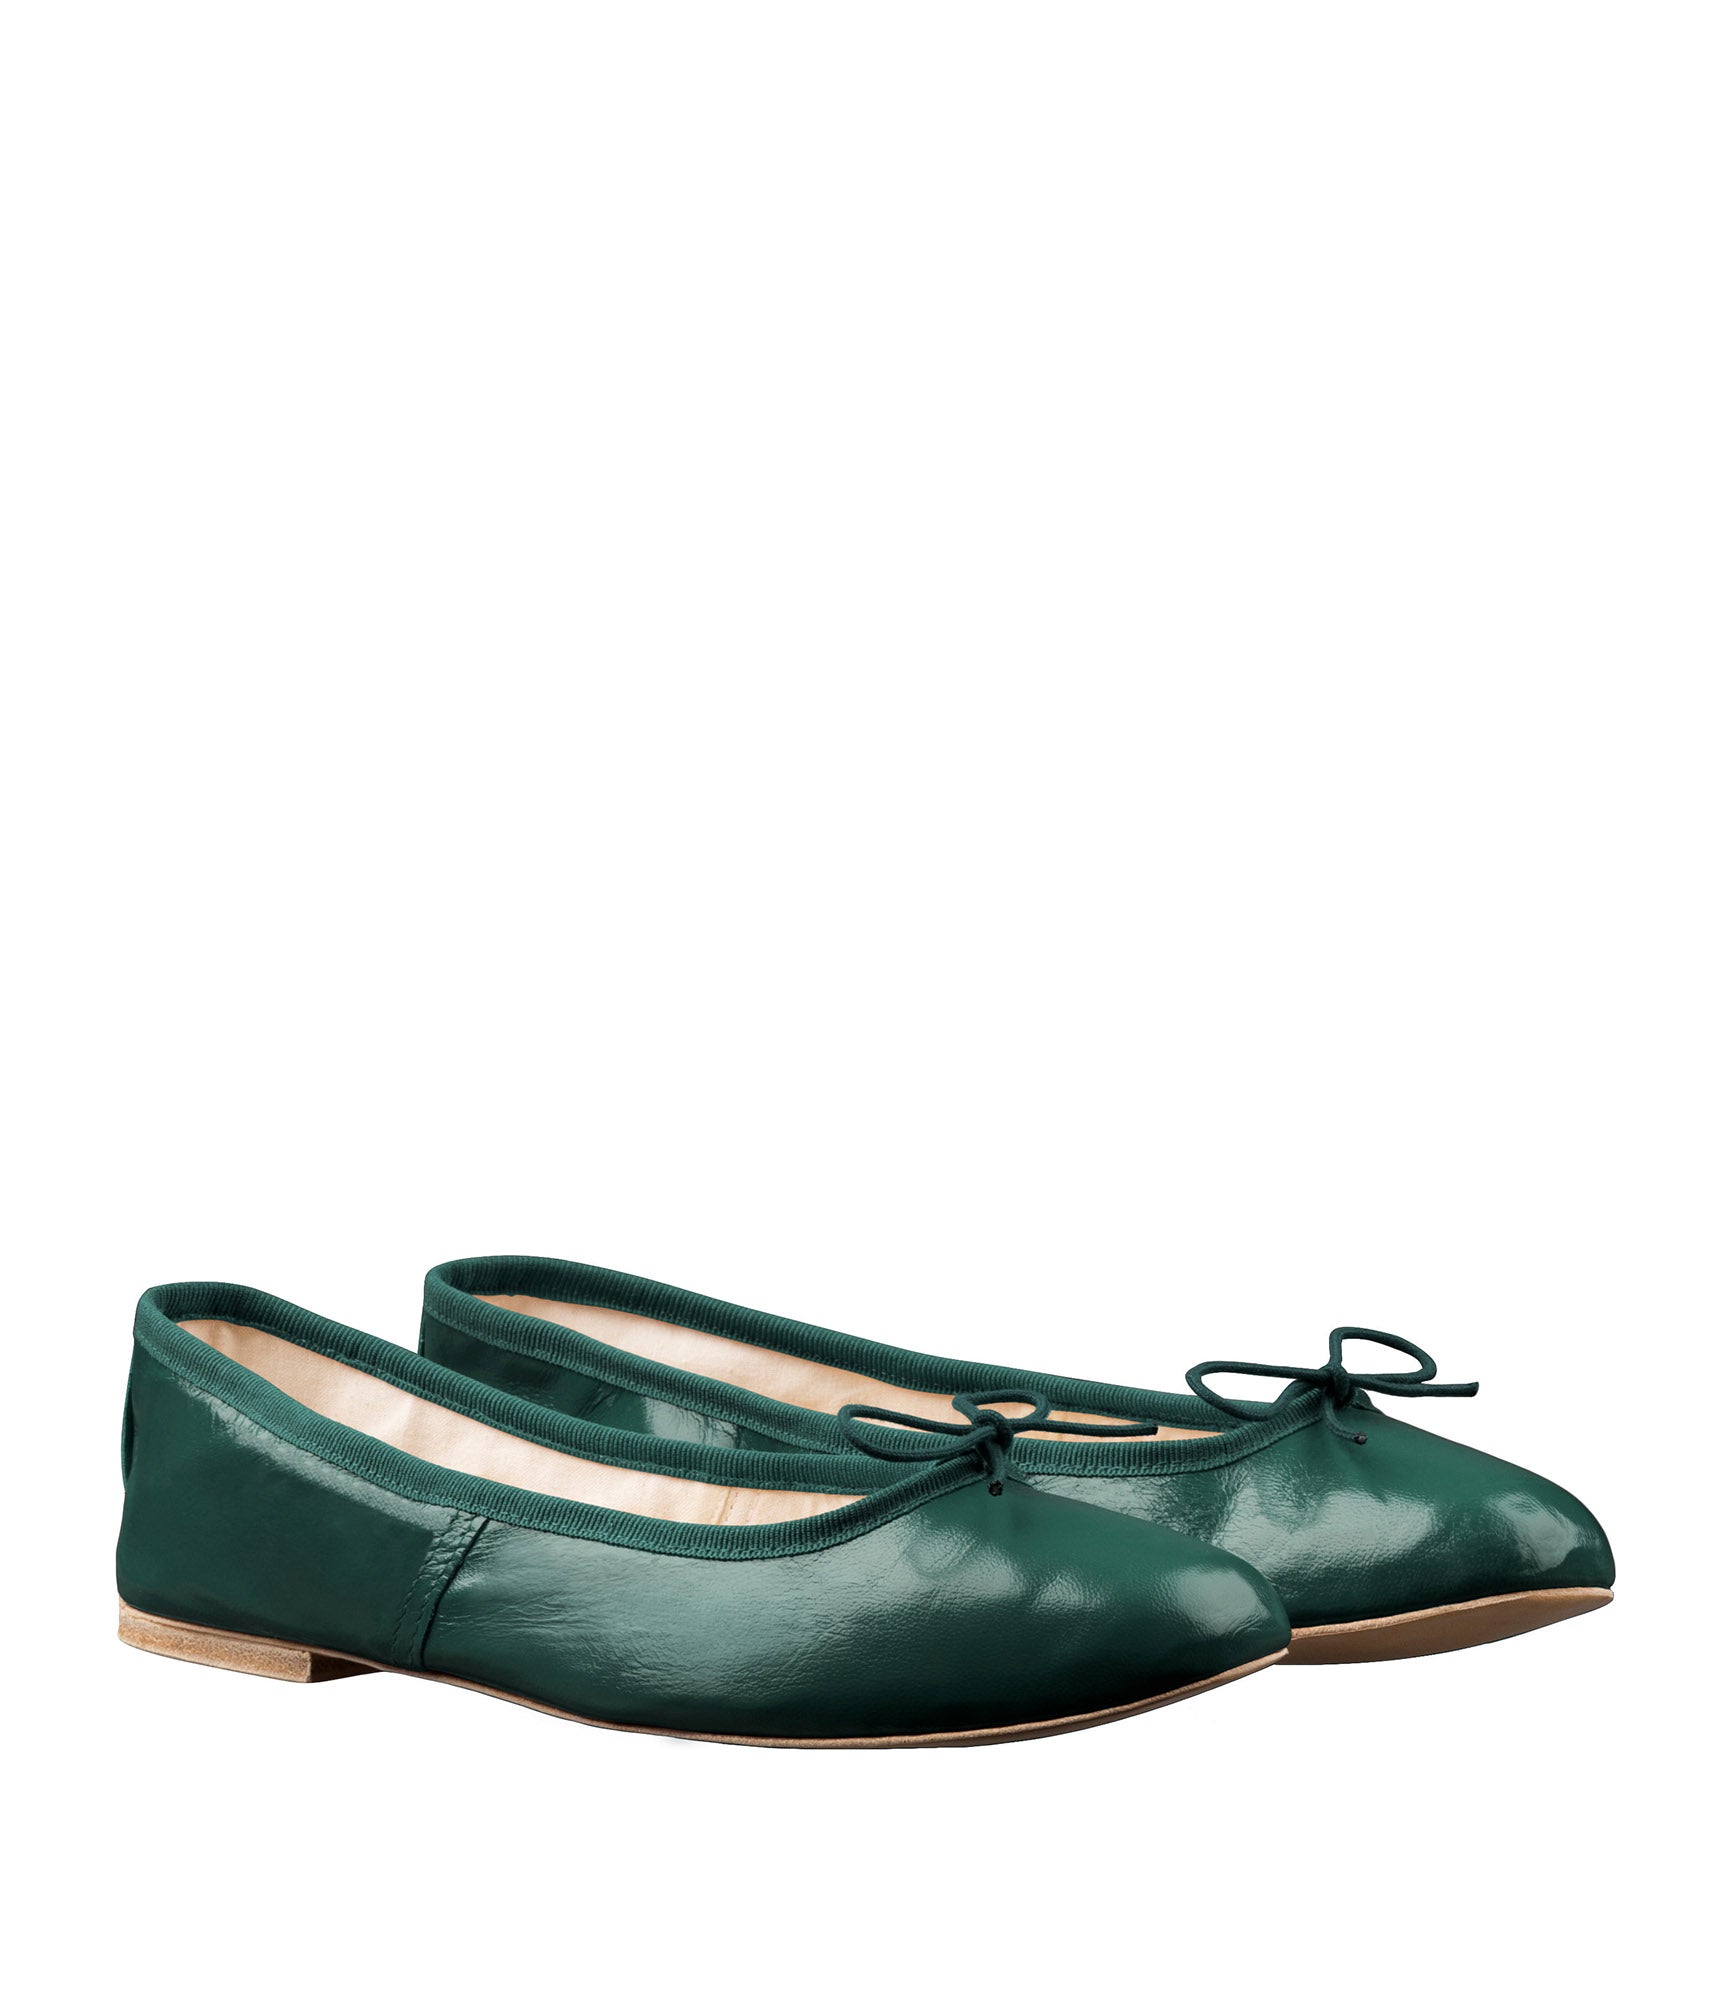 Porselli ballet flat shoes - Accessories | A.P.C.